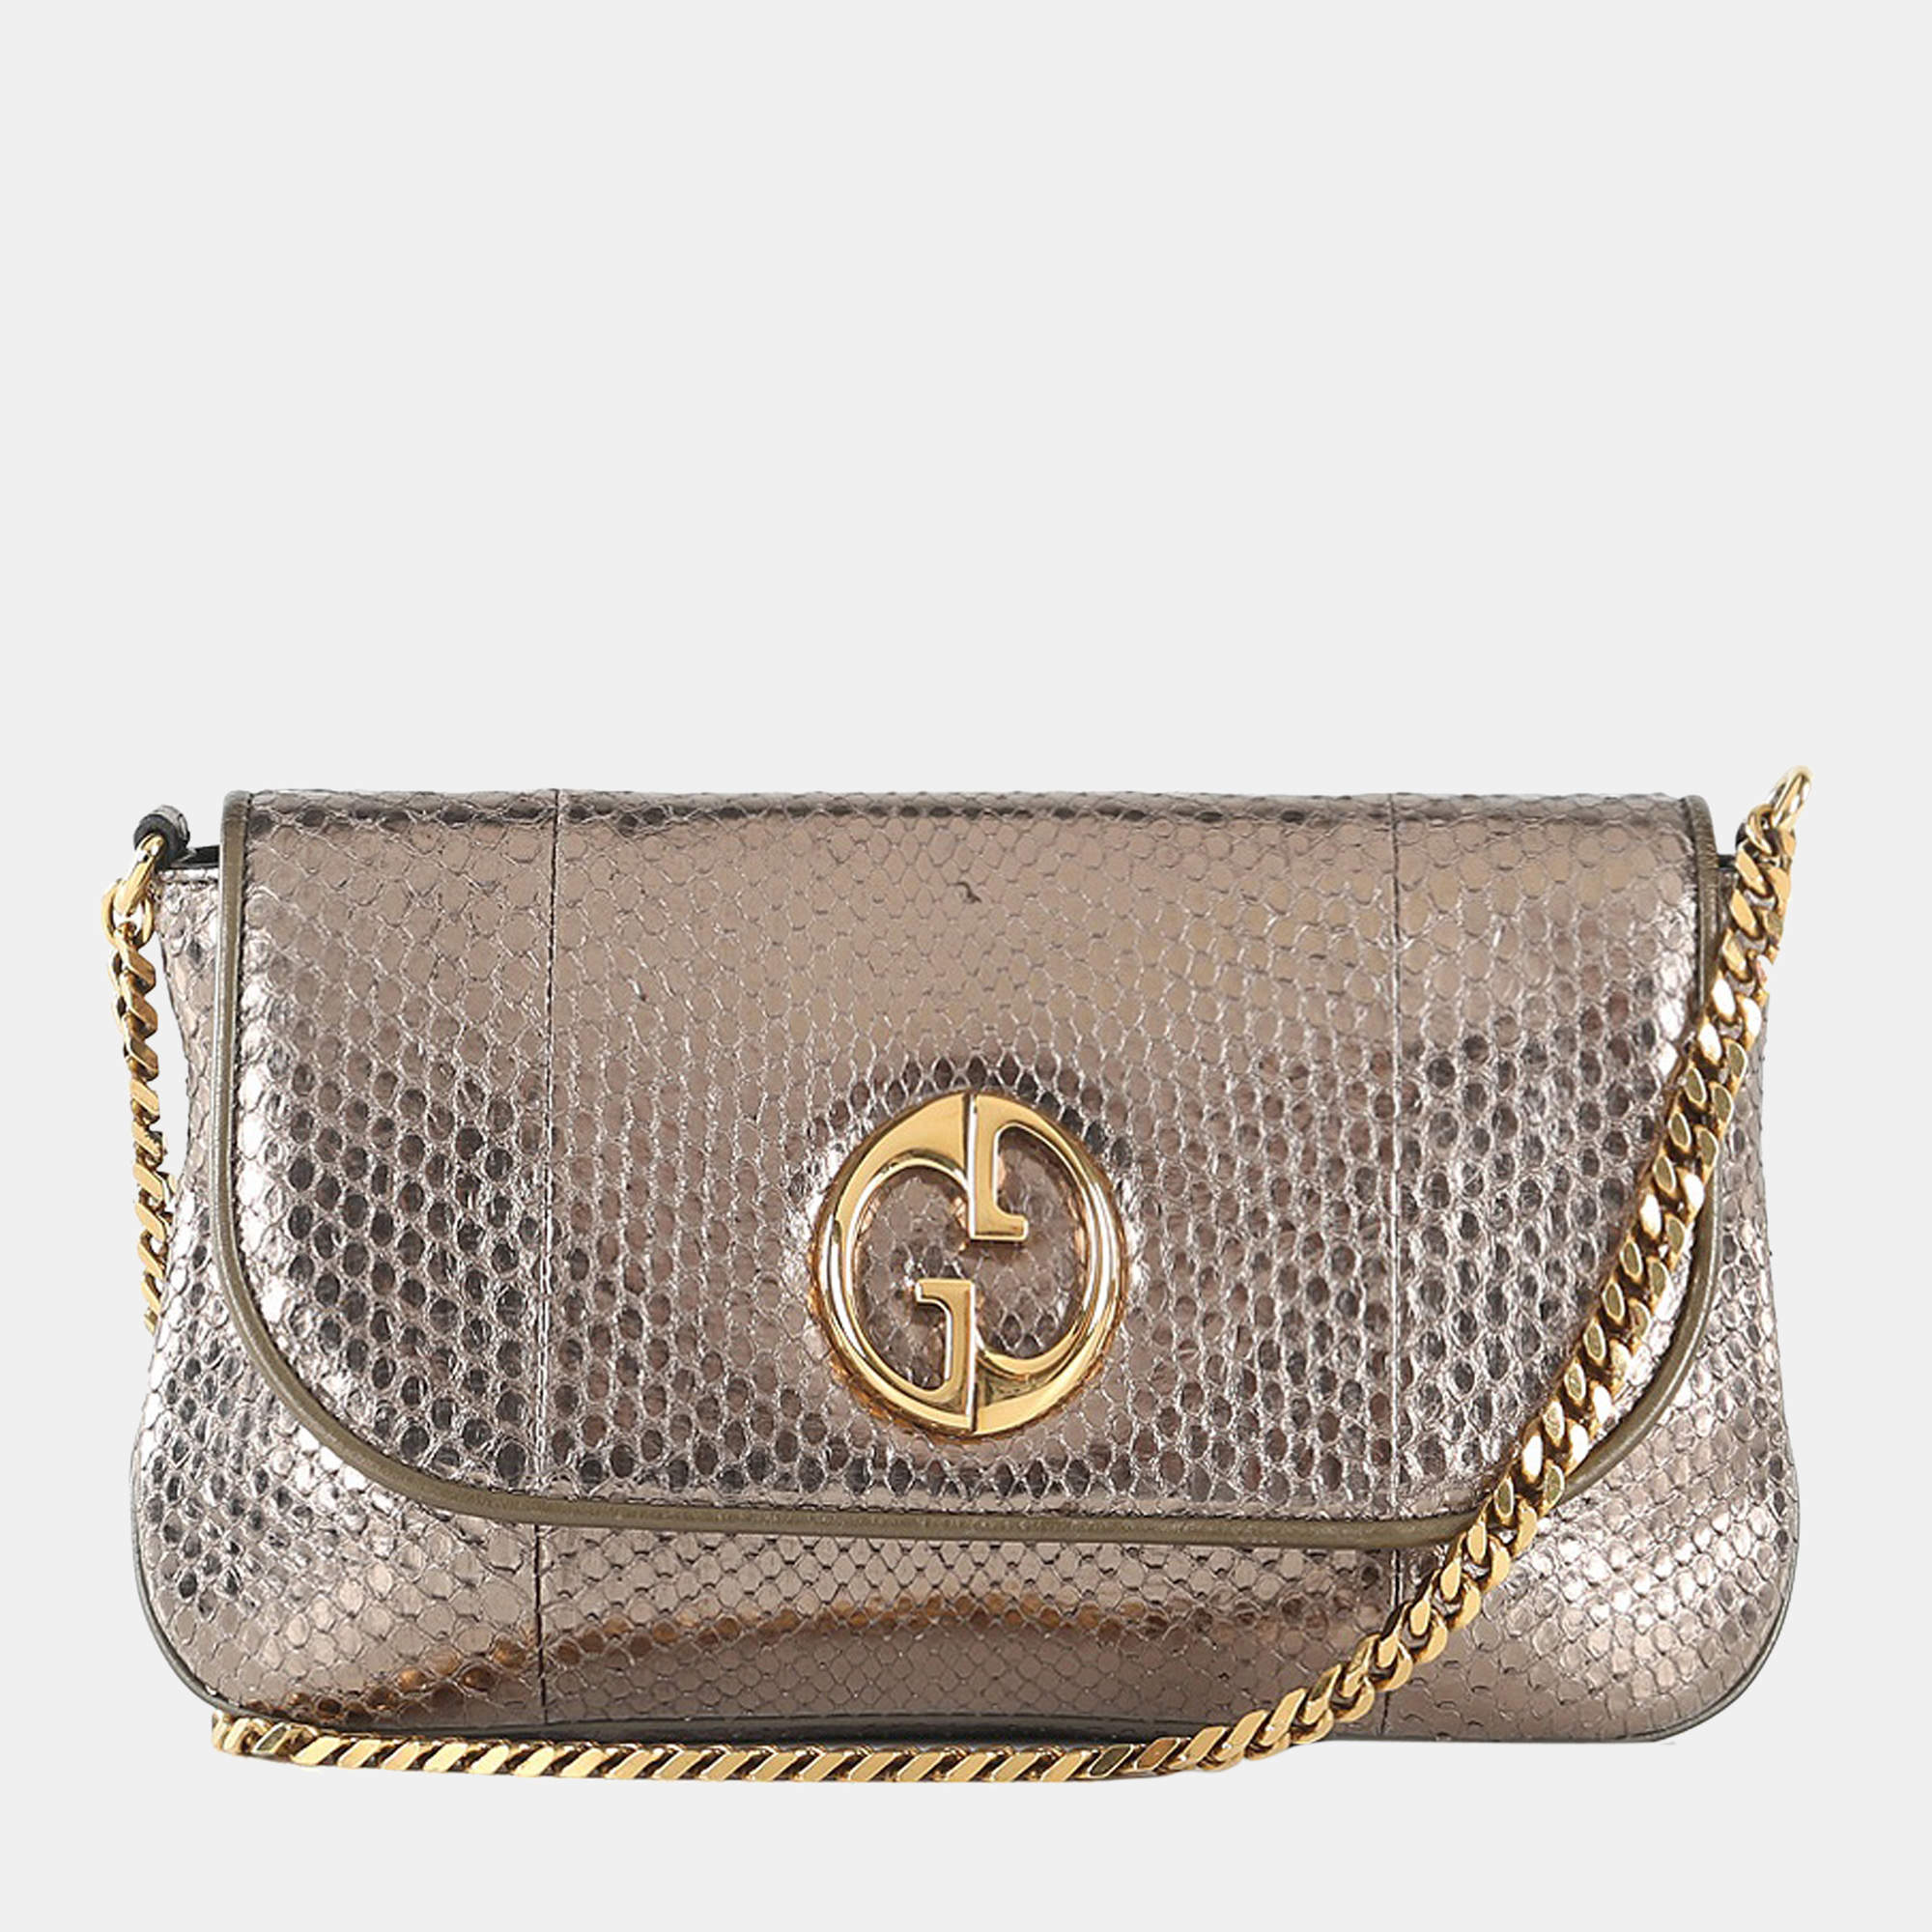 Gucci Snakeskin Style Handbag, Nwot Auction